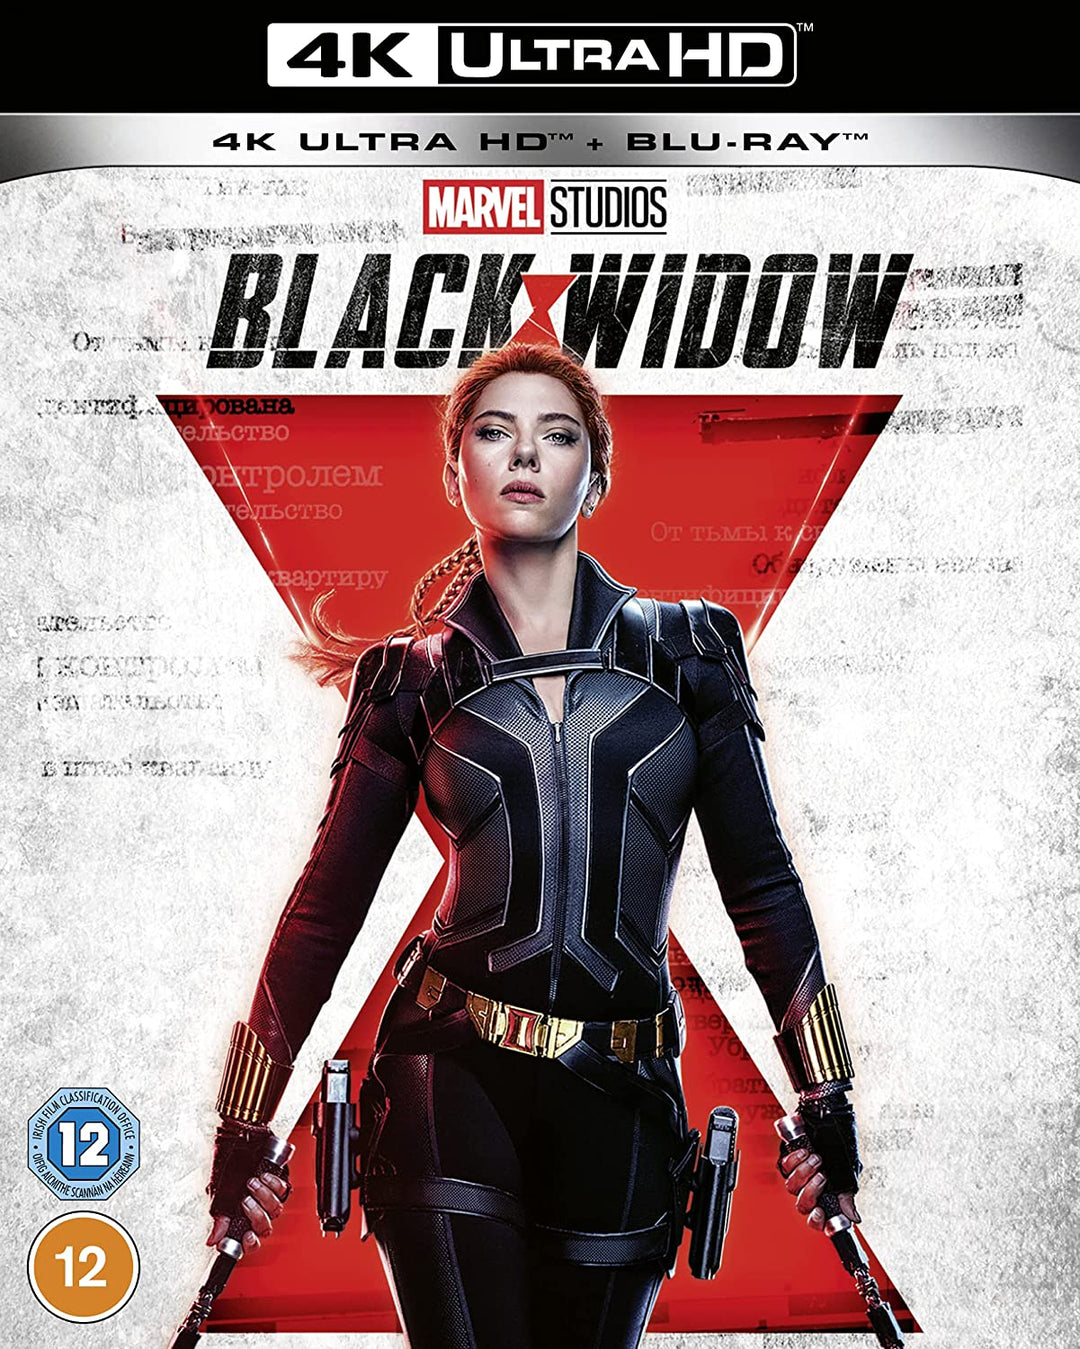 Marvel Studios Black Widow UHD - Action/Adventure [Blu-ray]